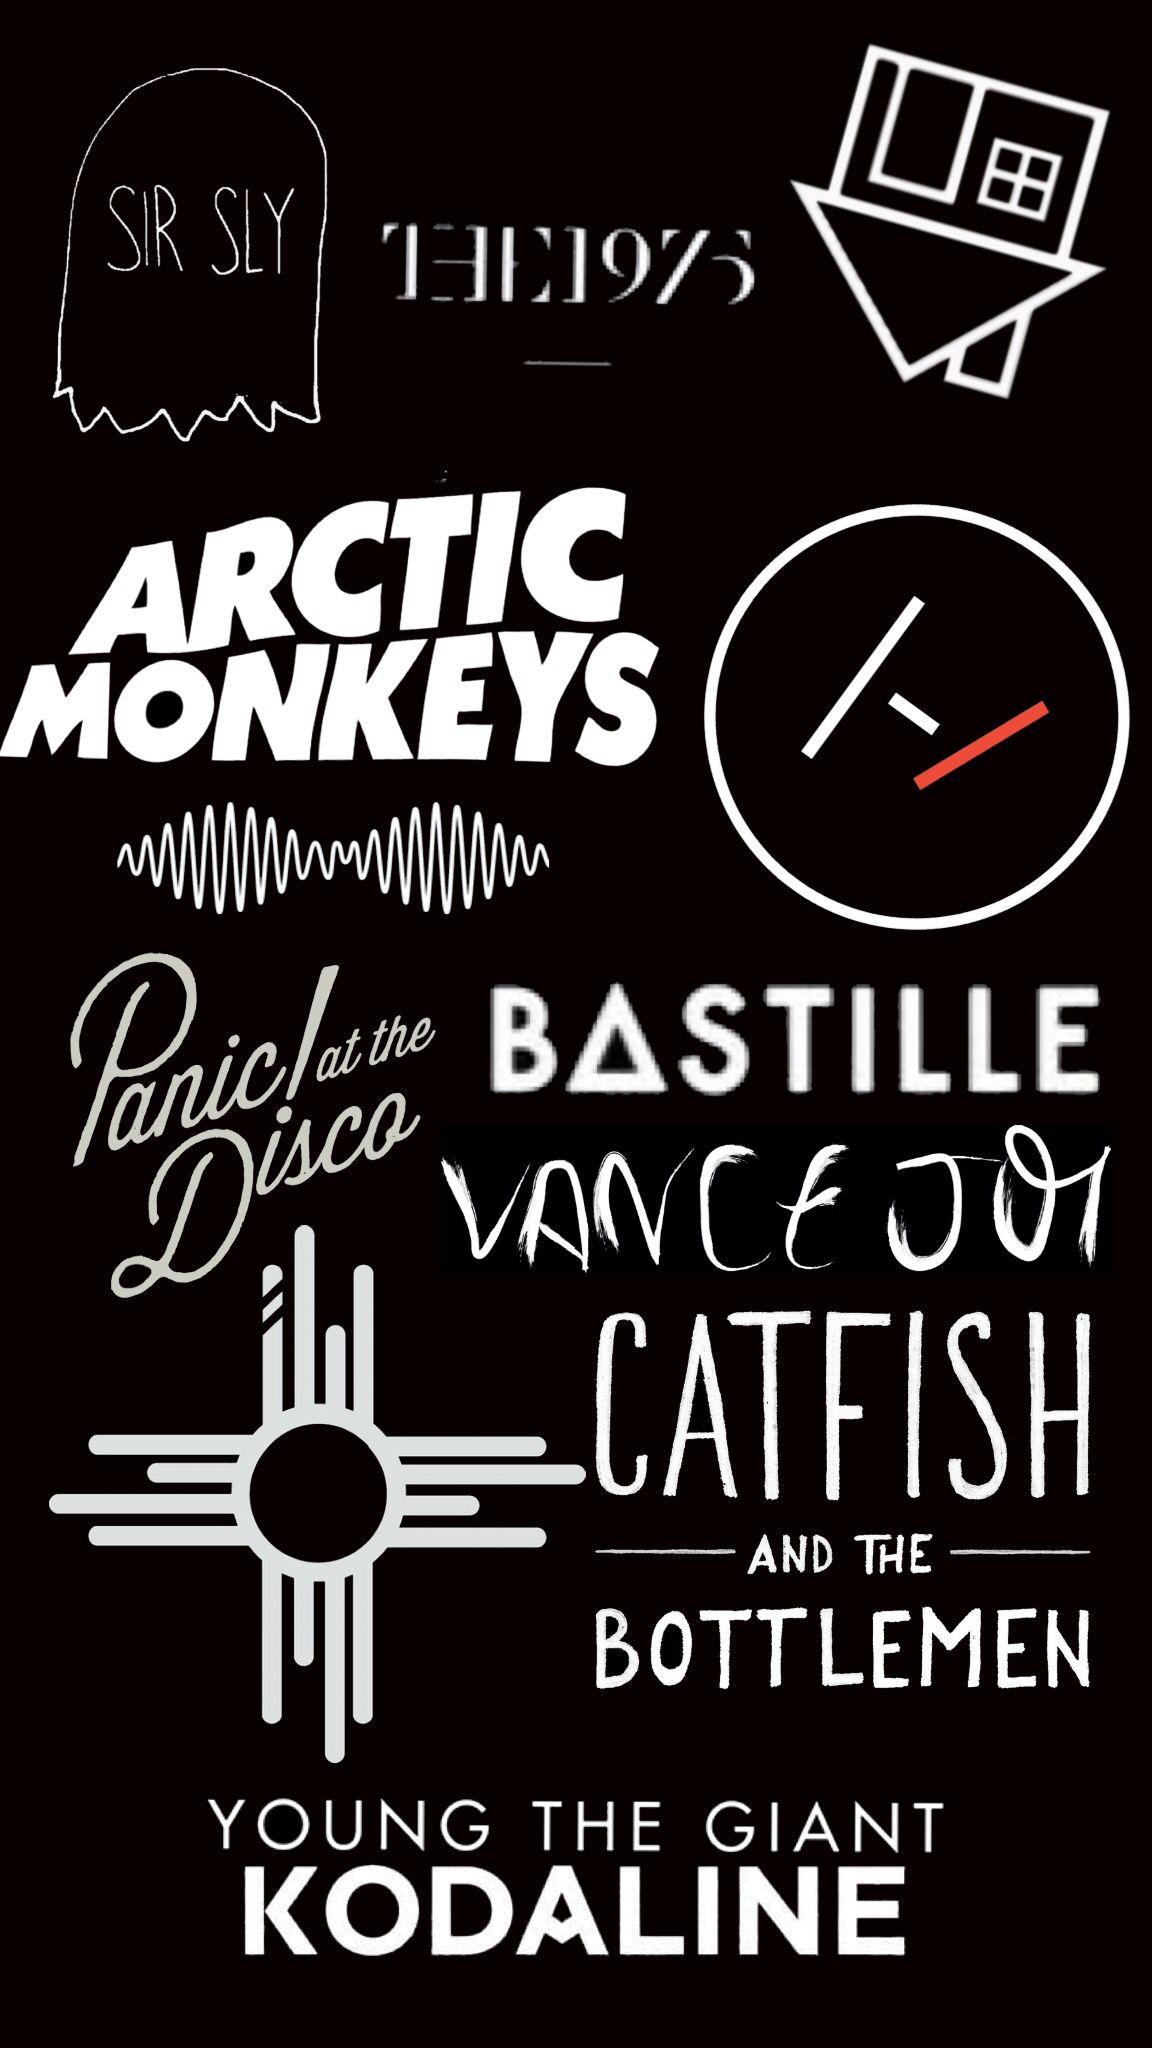 Band logo wallpaper indie and alternative. Band logo design, Band logos, Record label logo